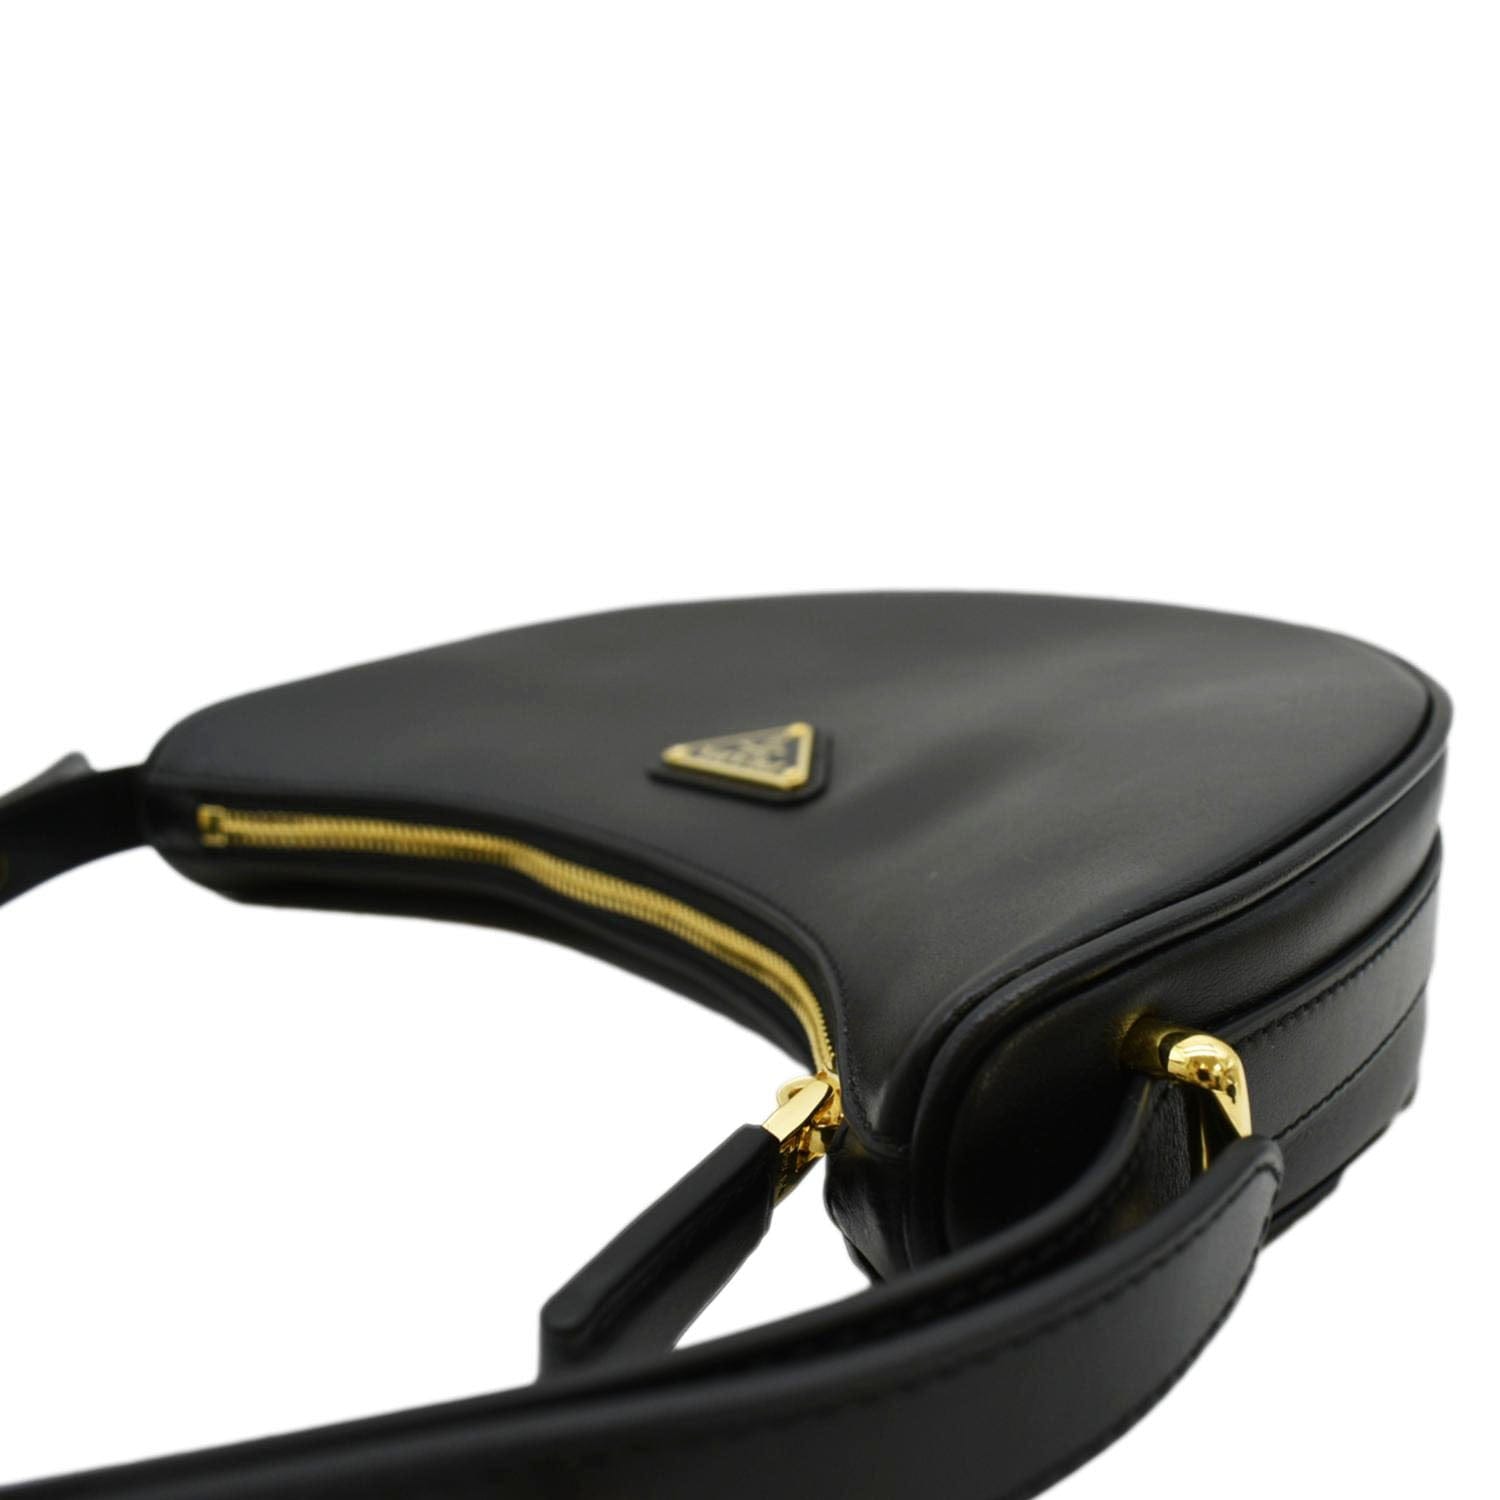 Arque Leather Shoulder Bag in Brown - Prada